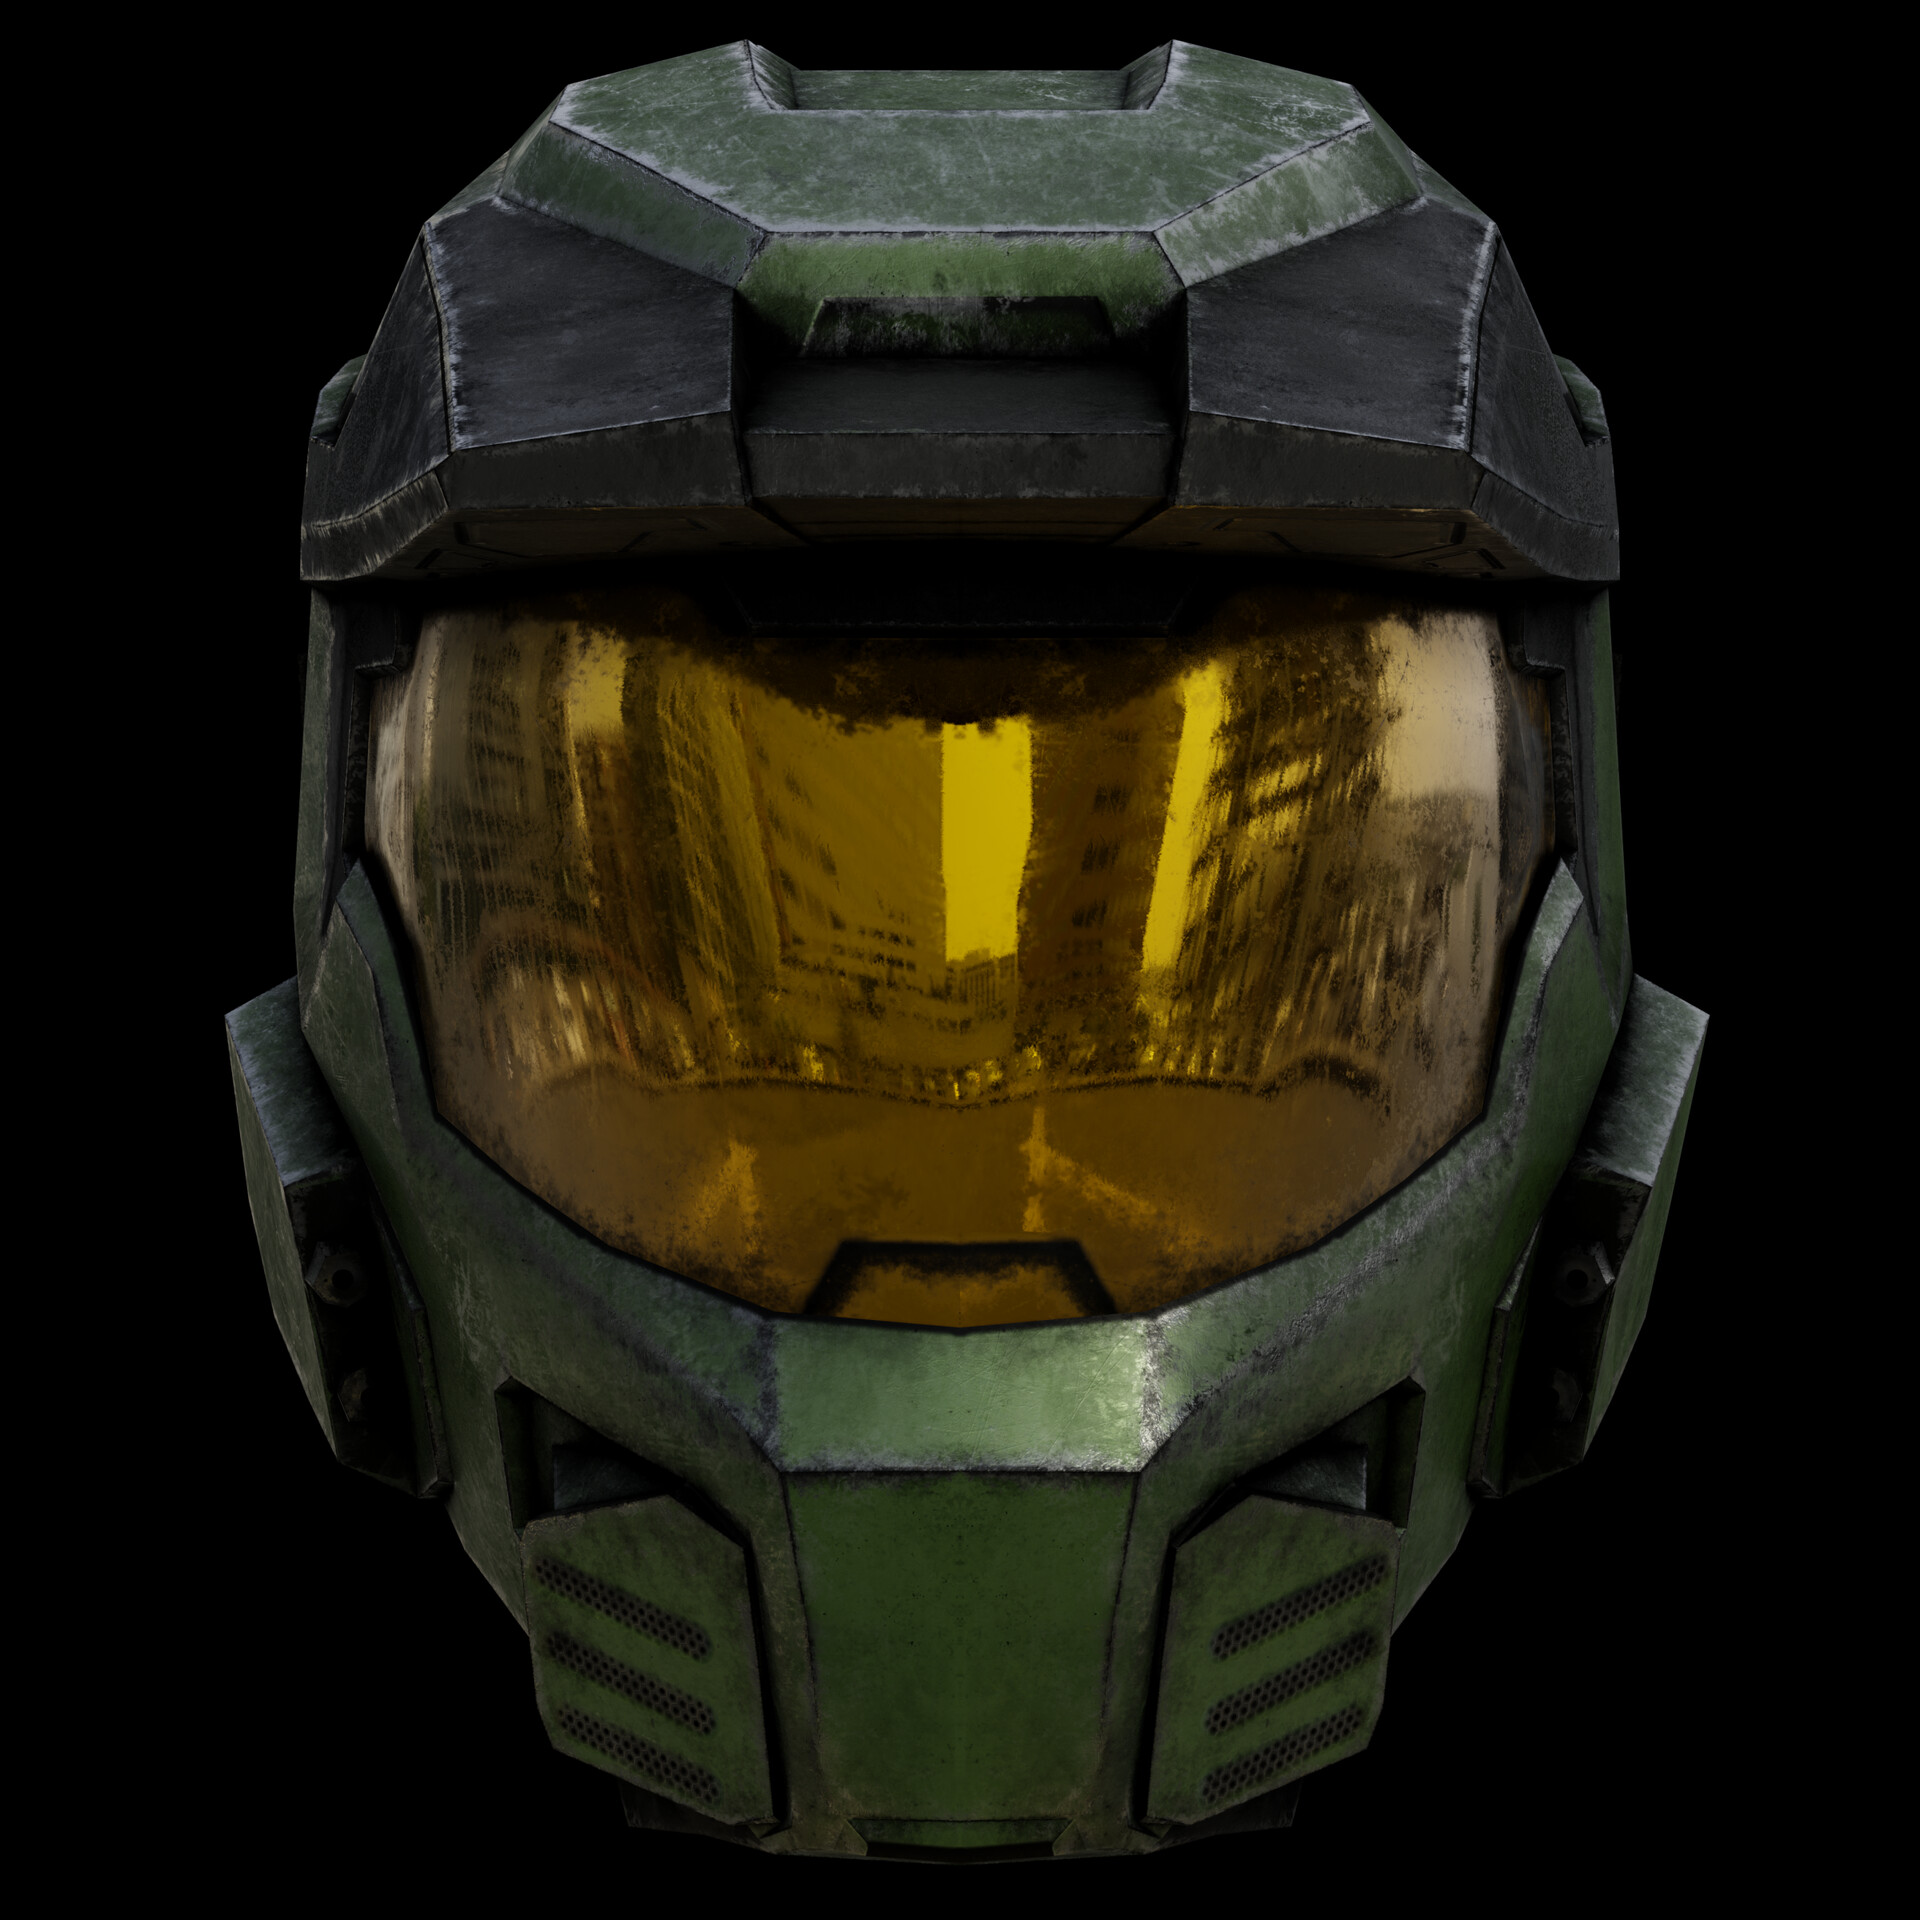 video game Halo Mark V helmet inspired by HALO